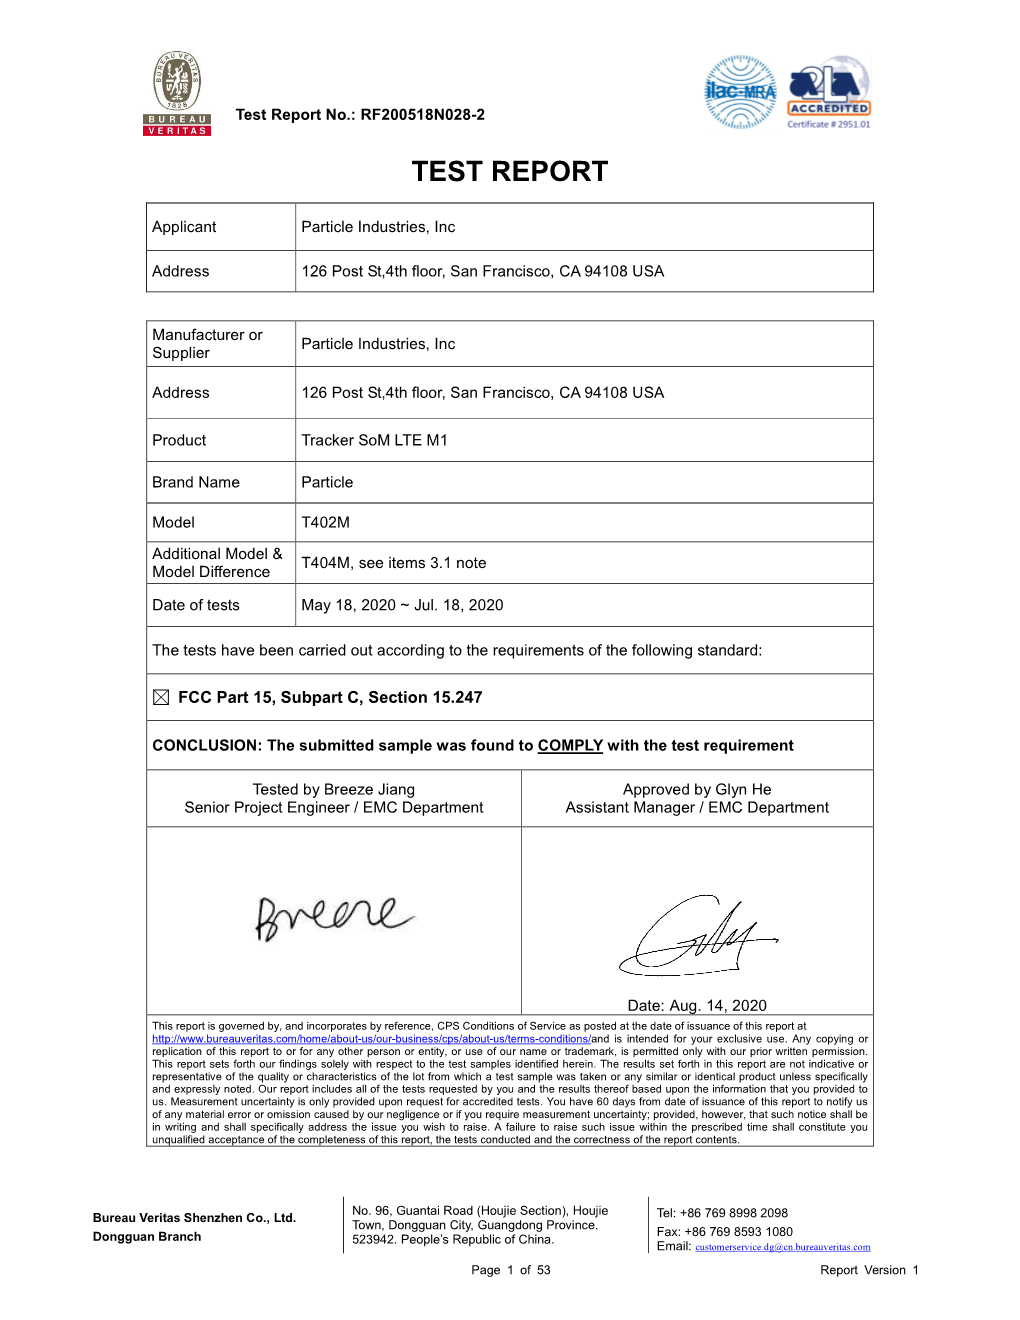 Test Report FCC Part 15 Subpart C, Section 15.247, Wi-Fi